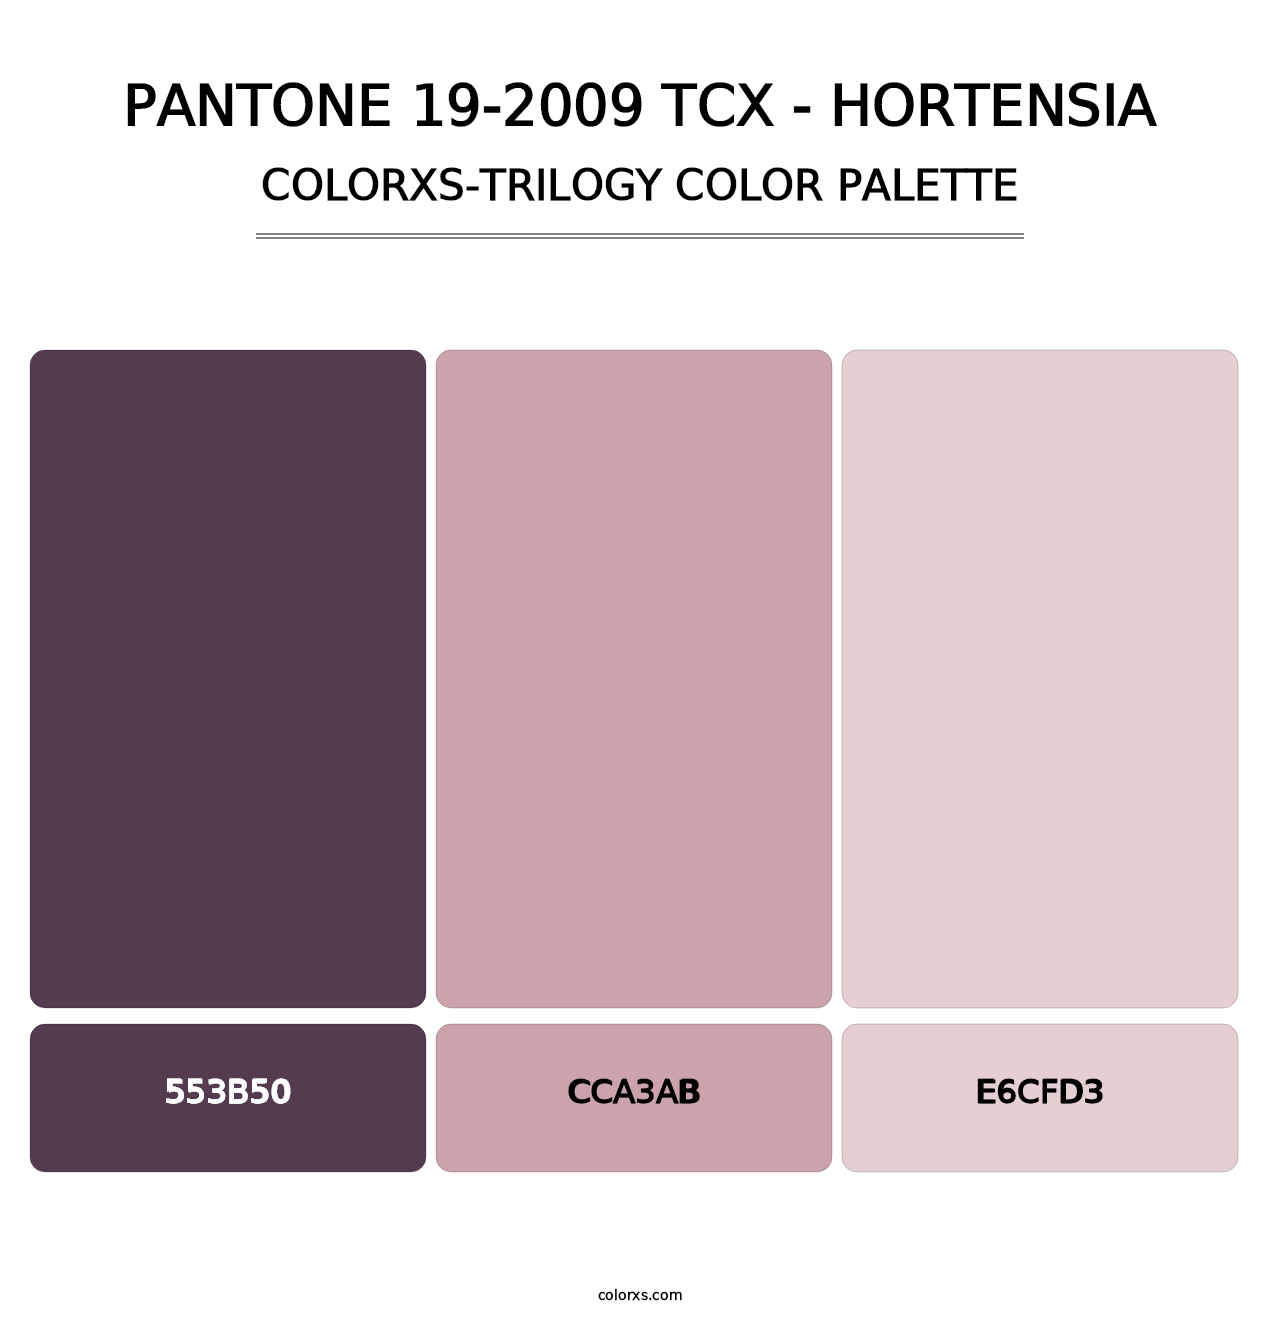 PANTONE 19-2009 TCX - Hortensia - Colorxs Trilogy Palette